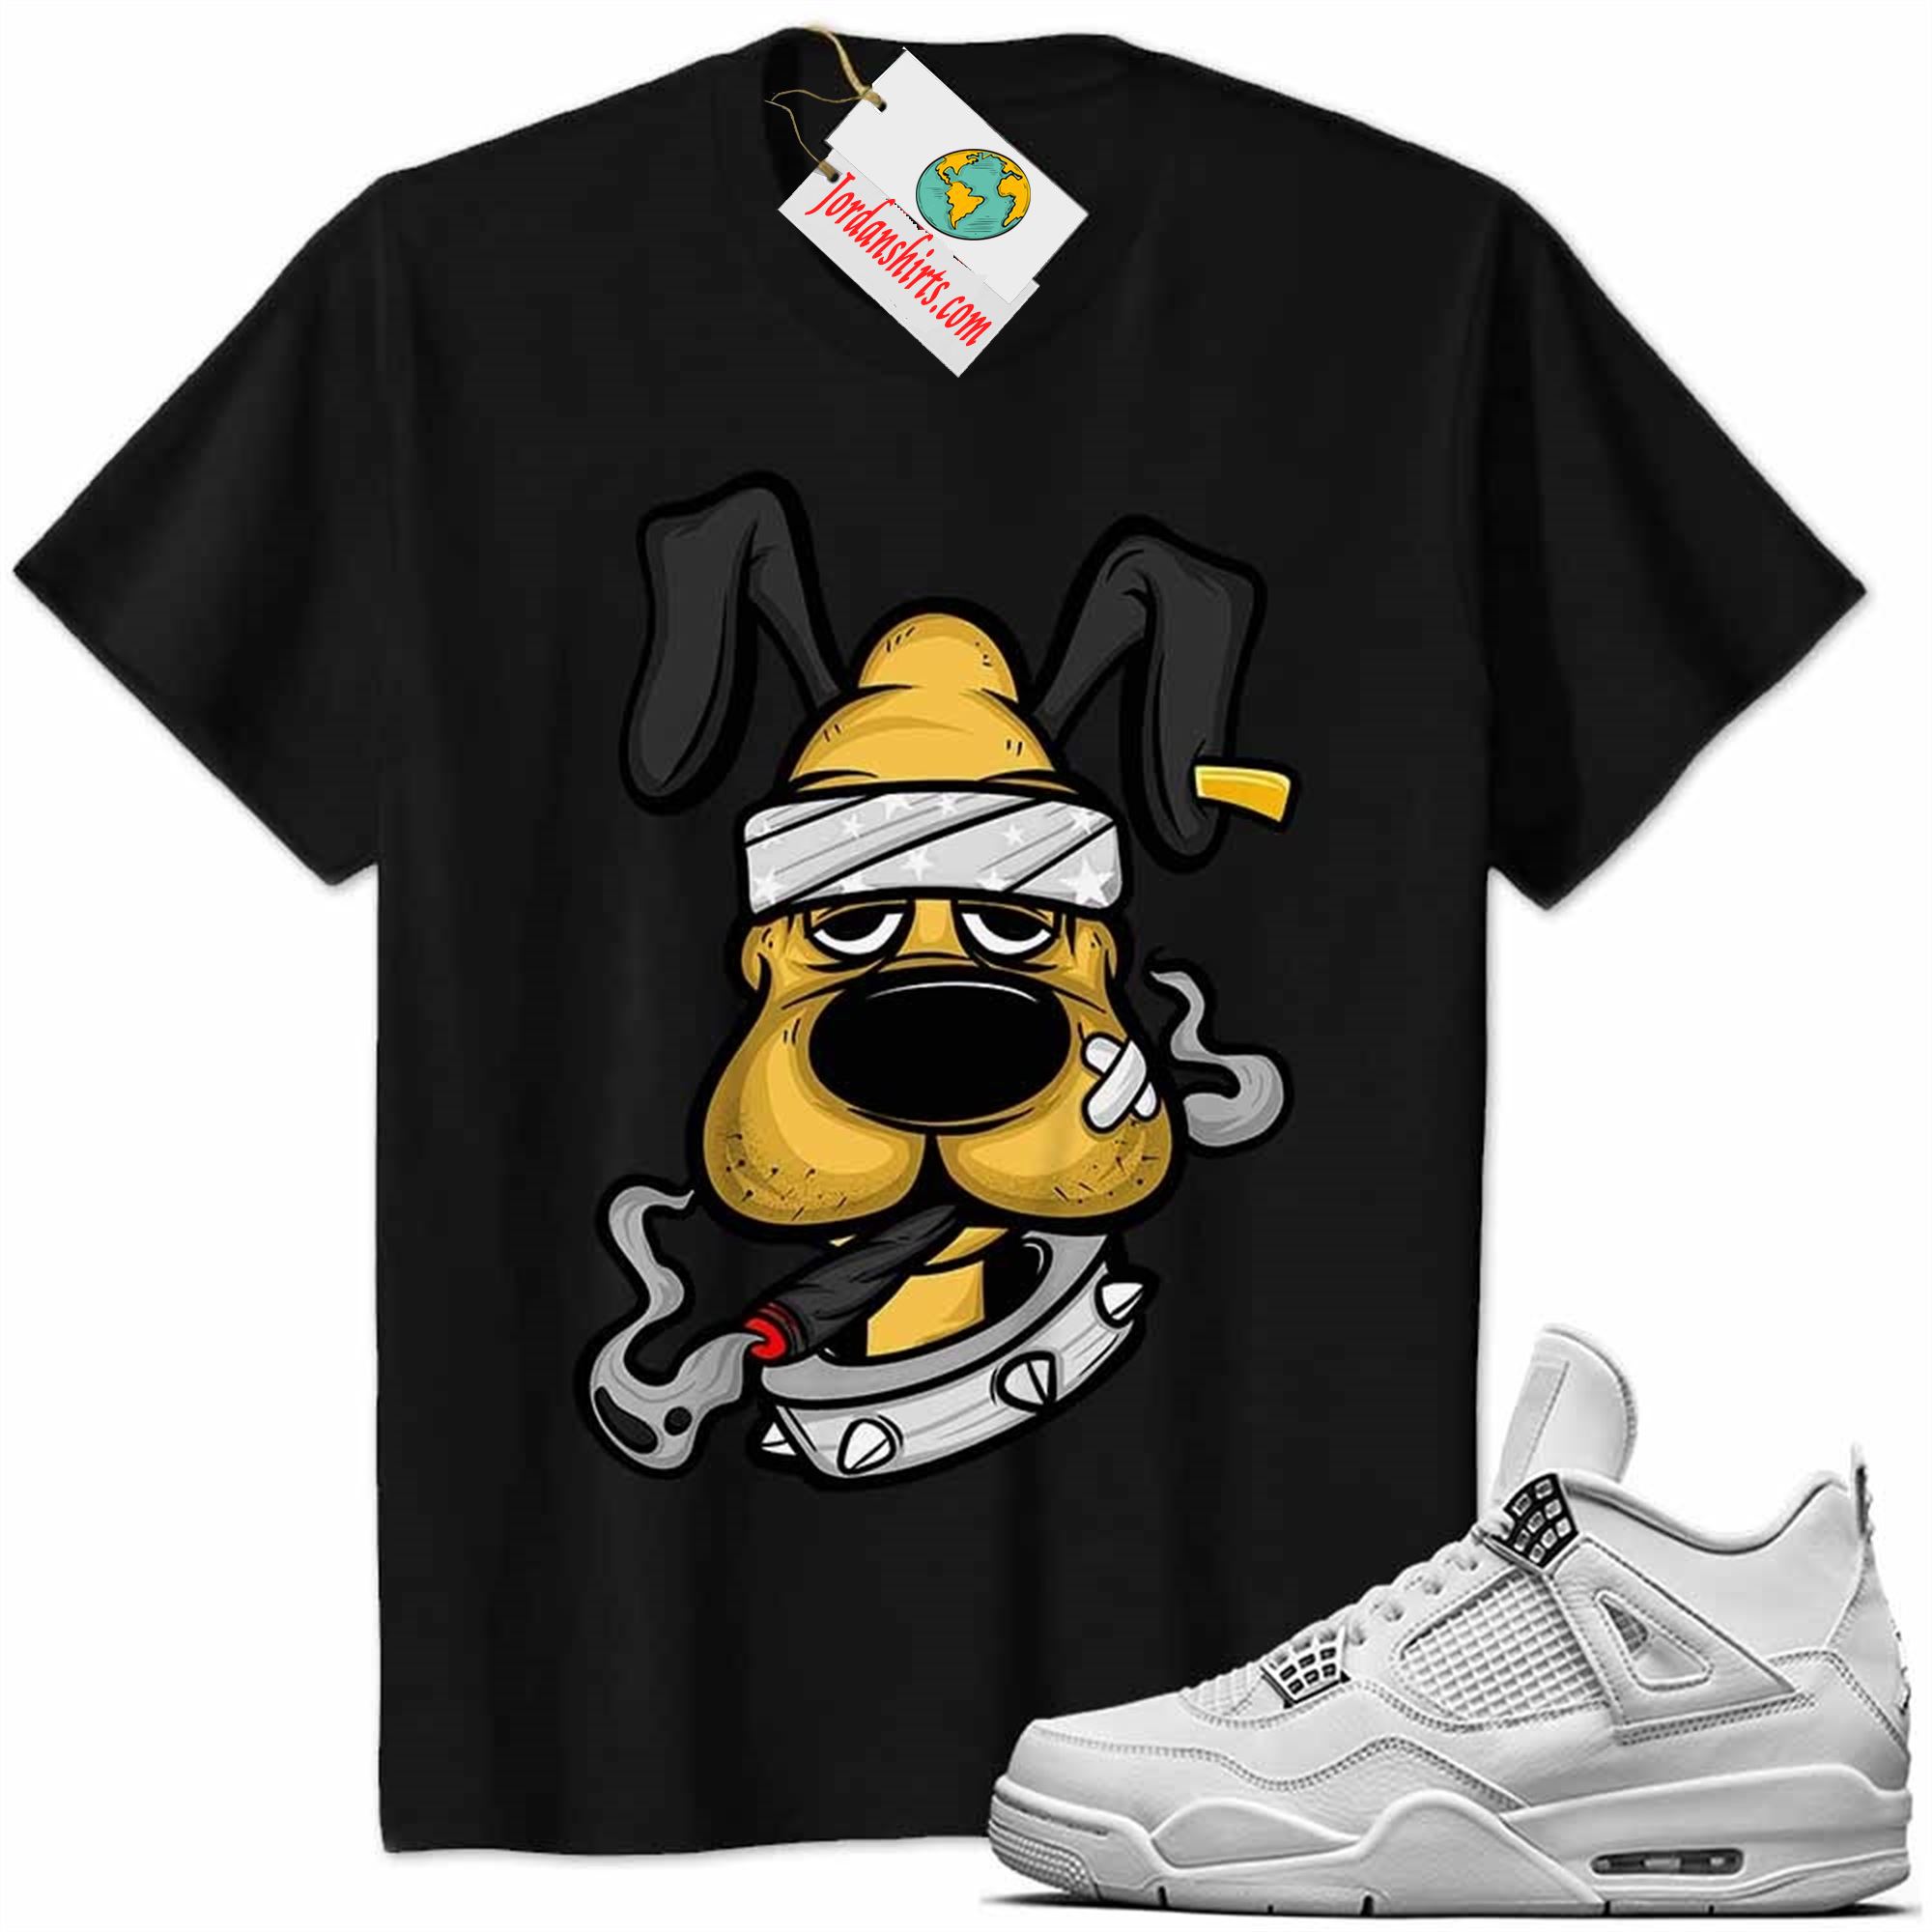 Jordan 4 Shirt, Gangster Pluto Smoke Weed Black Air Jordan 4 Pure Money 4s Size Up To 5xl